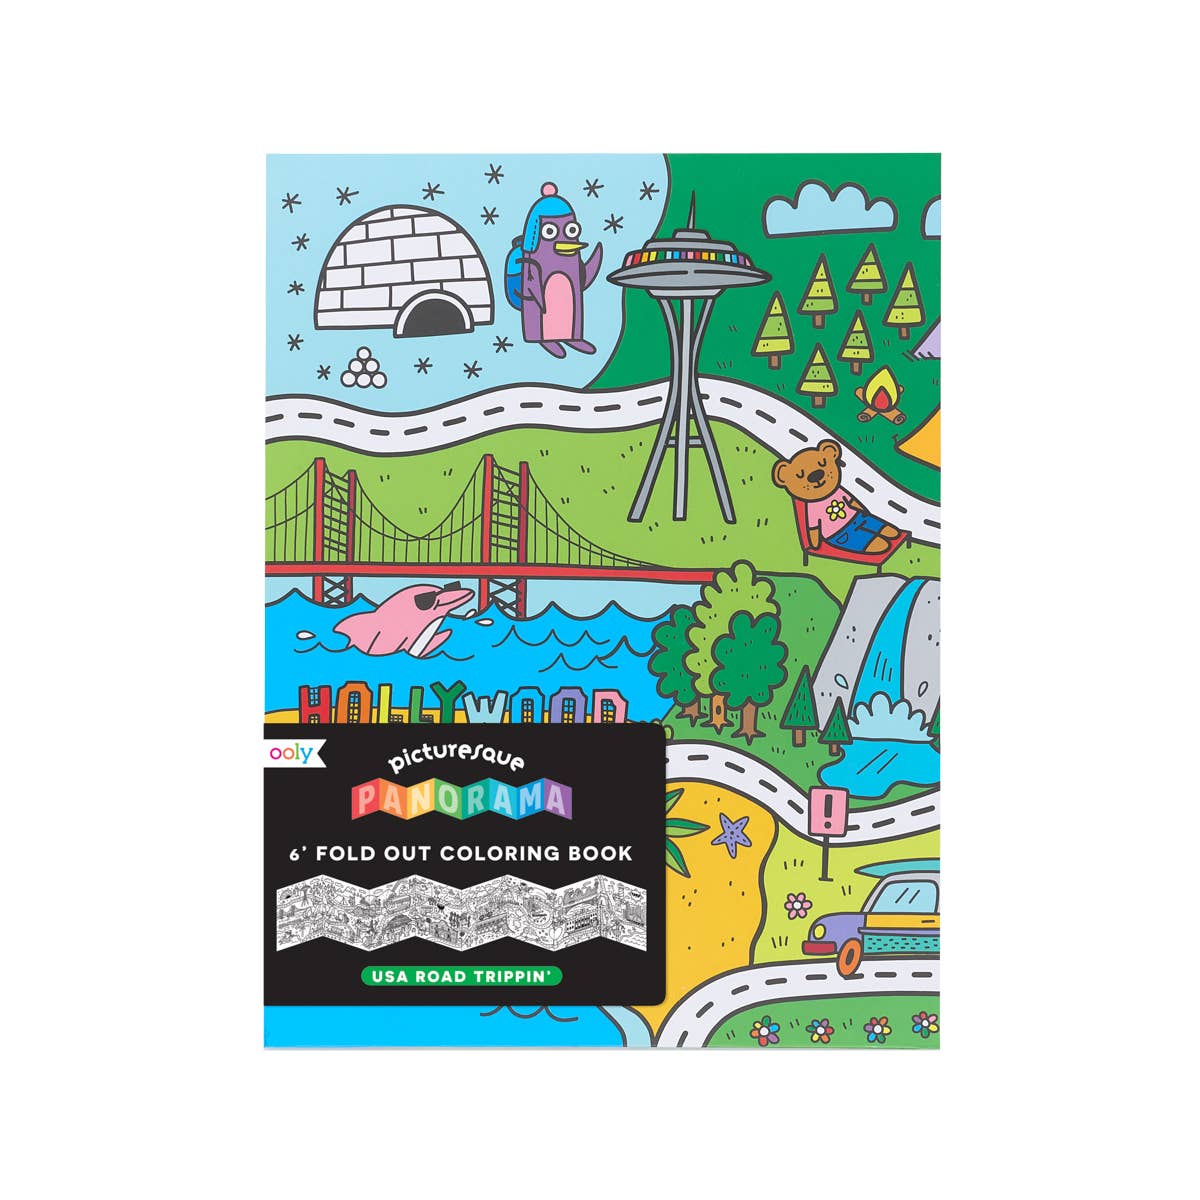 Panorama Coloring Book - USA Road Trippin'